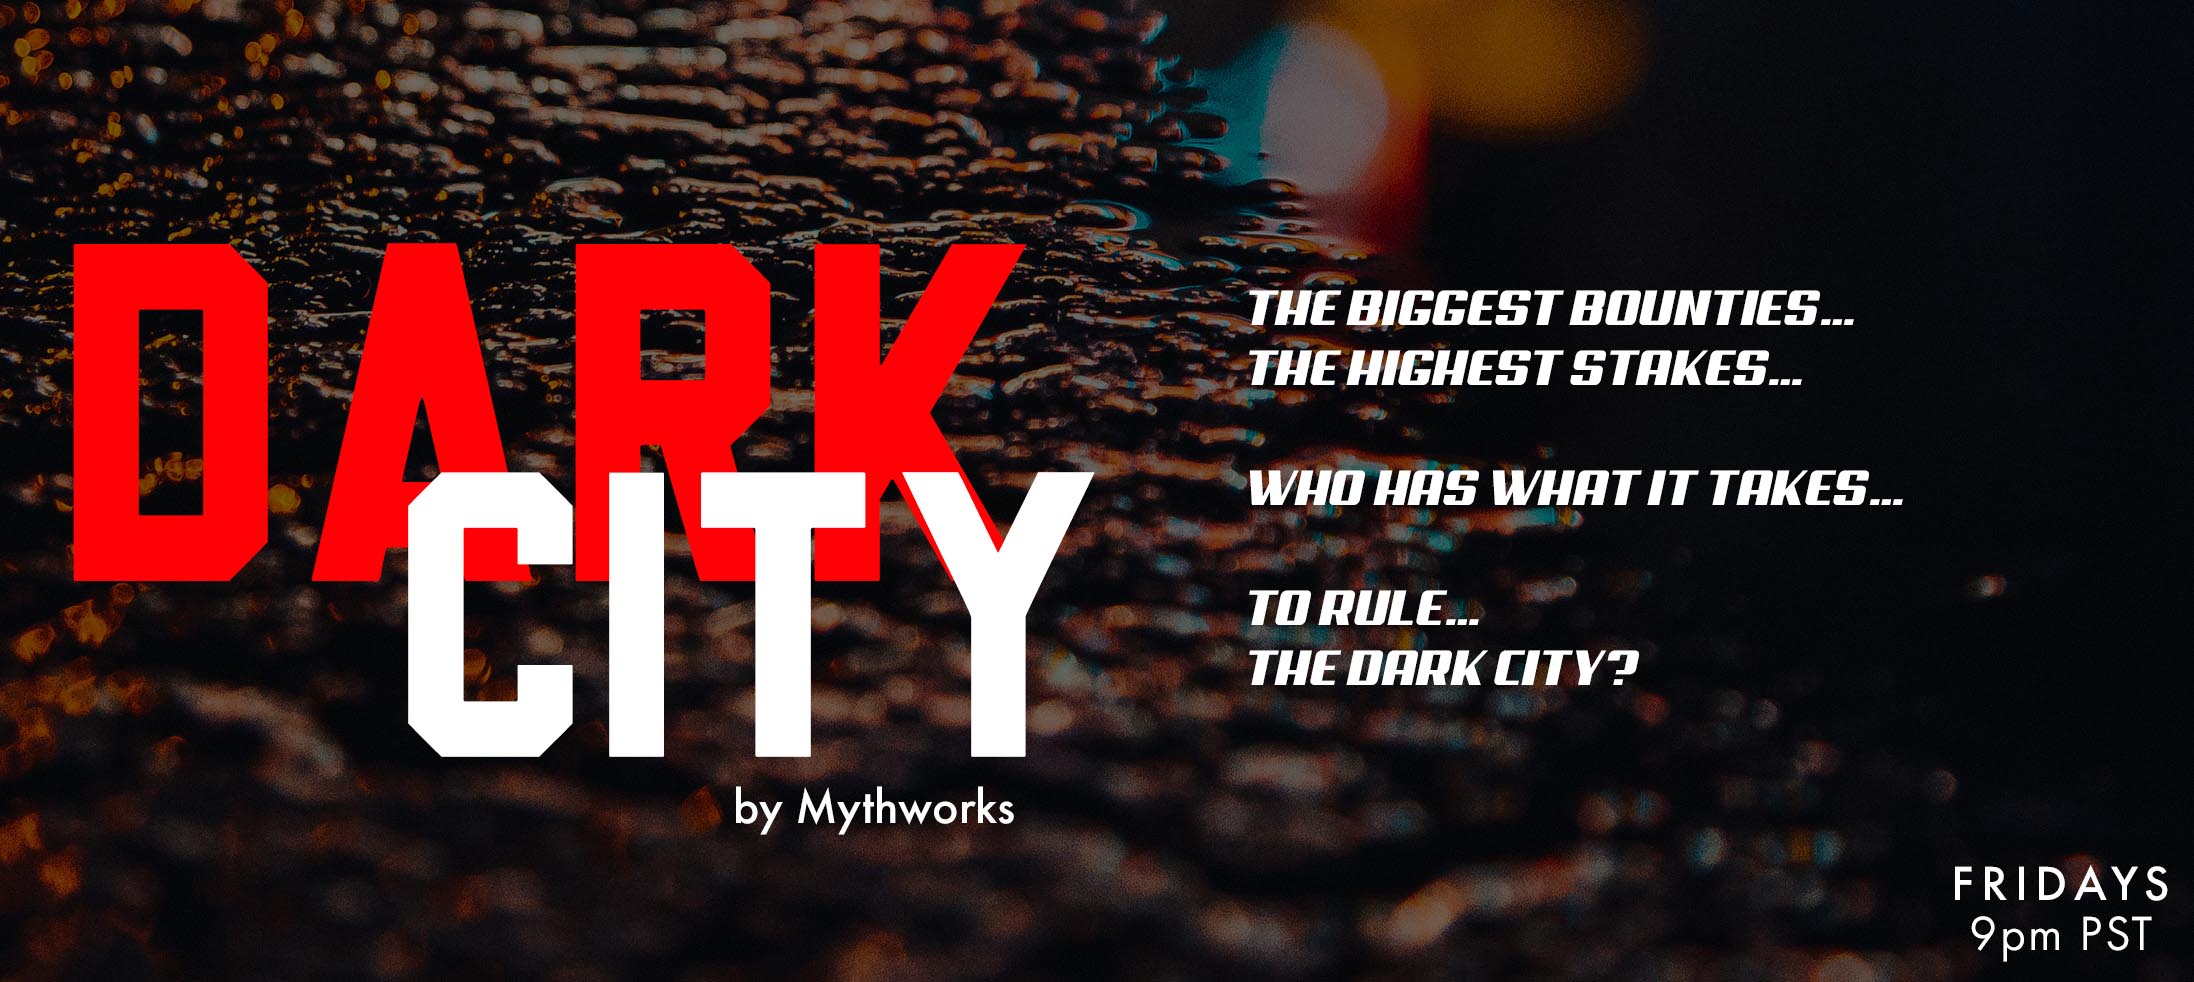 CBR+PNK: DARK CITY